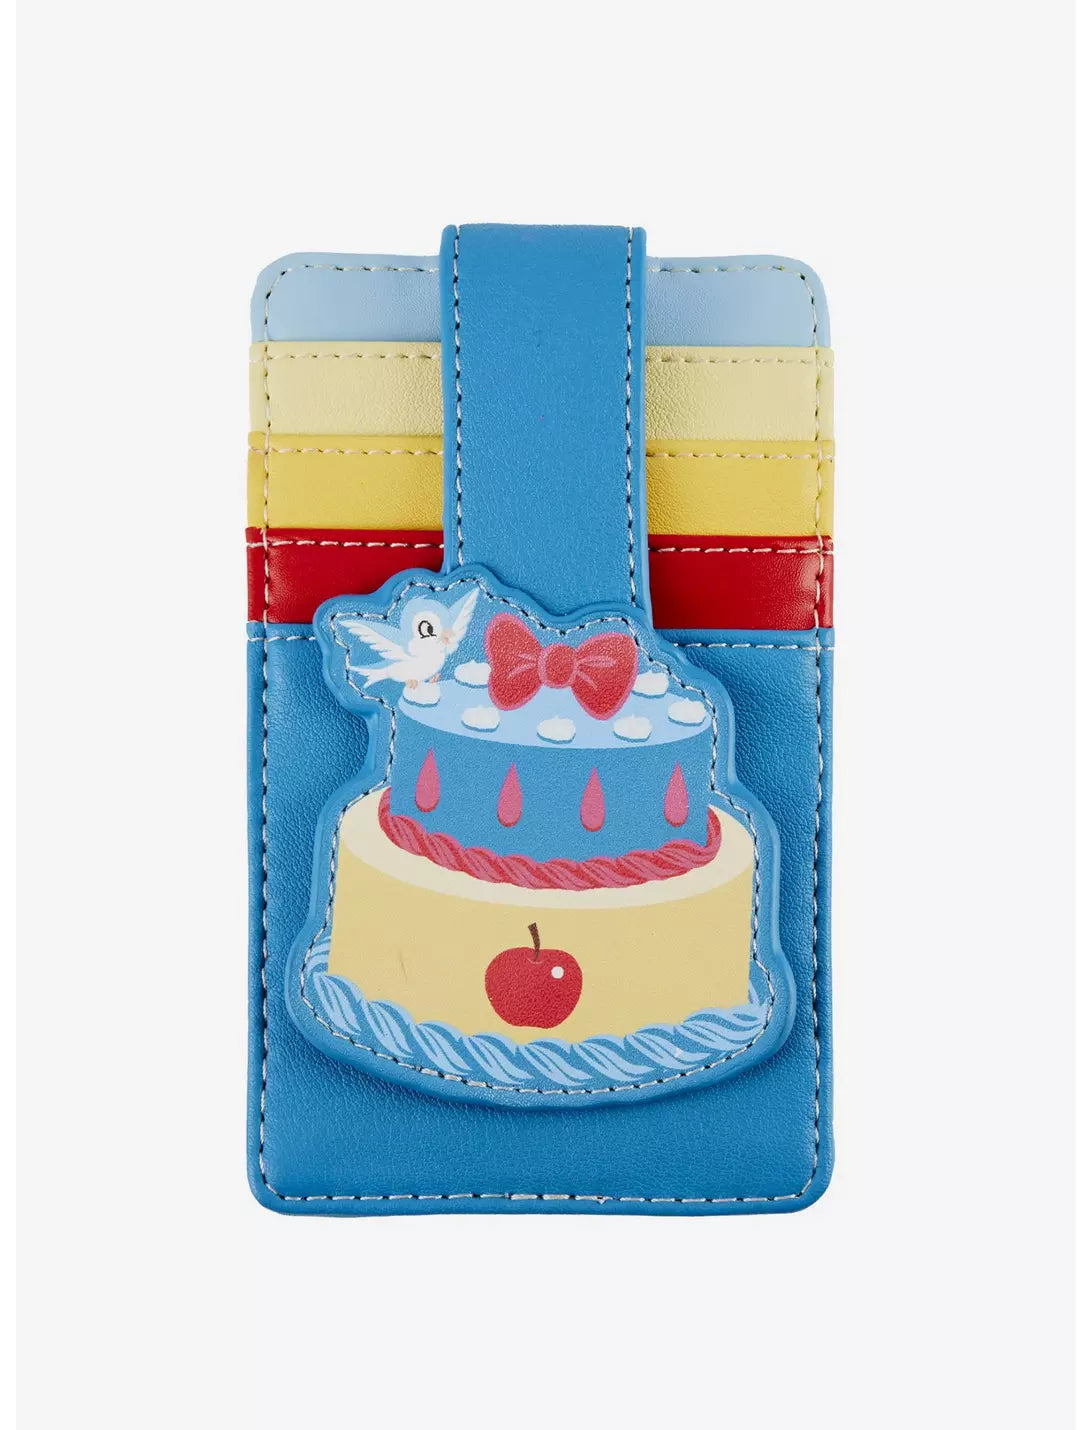 LF Snow White Cake Cardholder